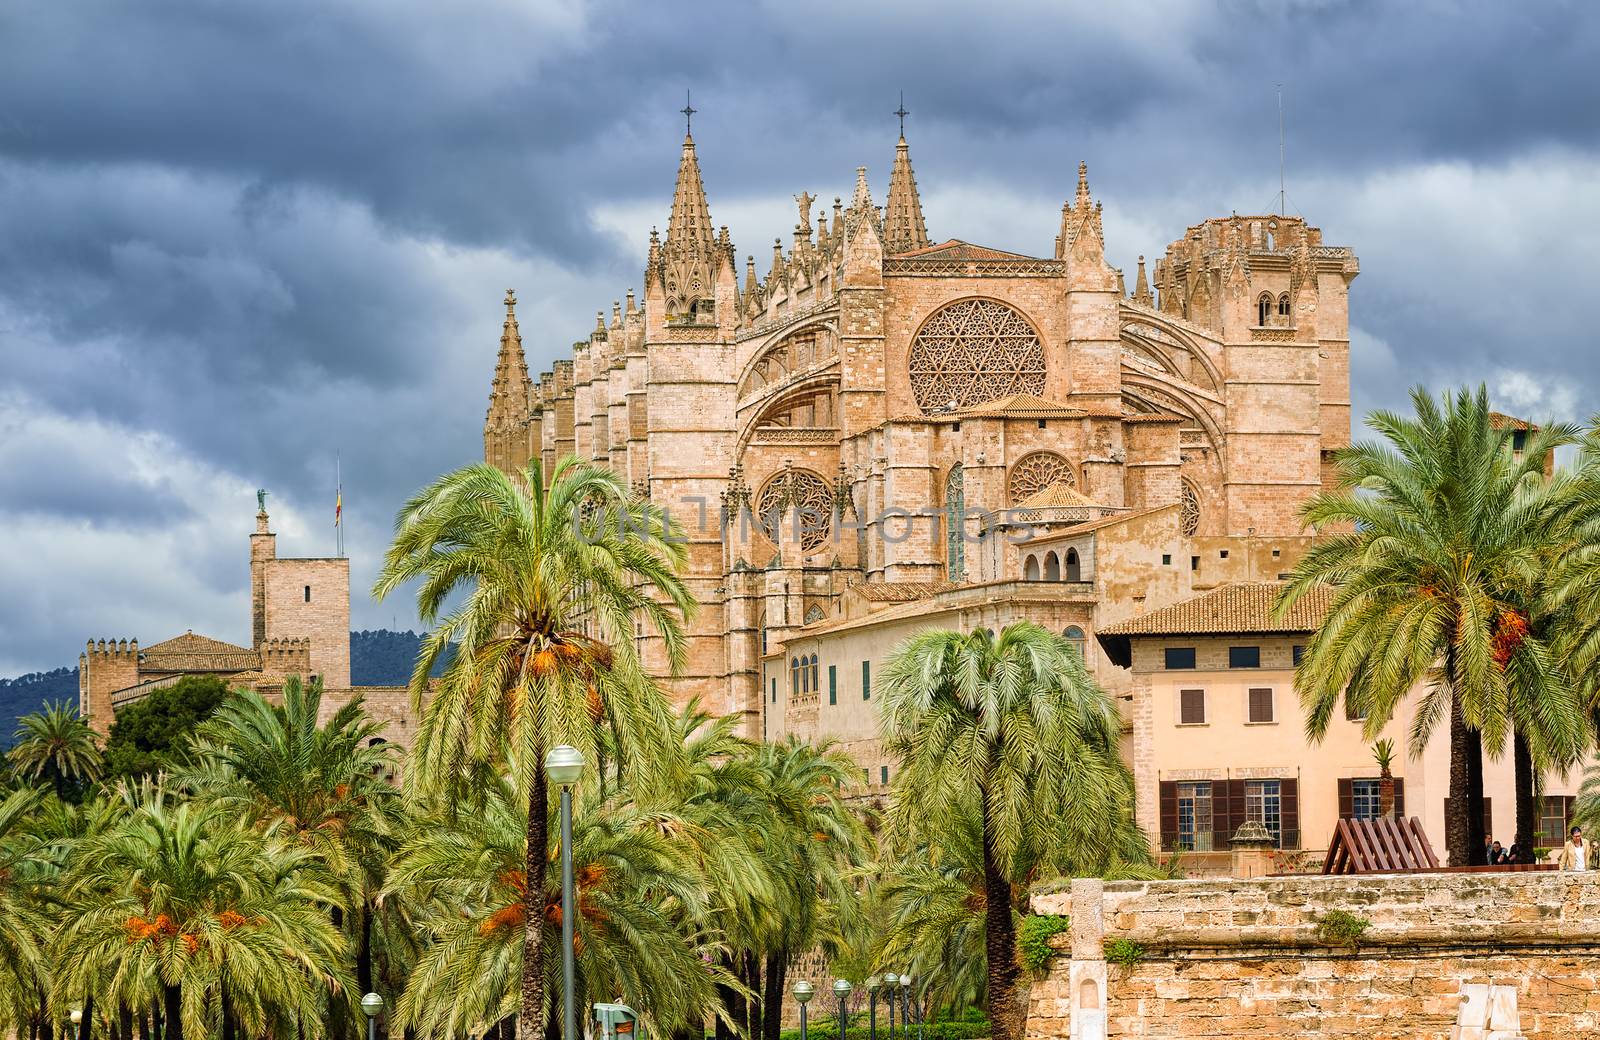 Gothic style Dome of Palma de Mallorca, Spain by GlobePhotos